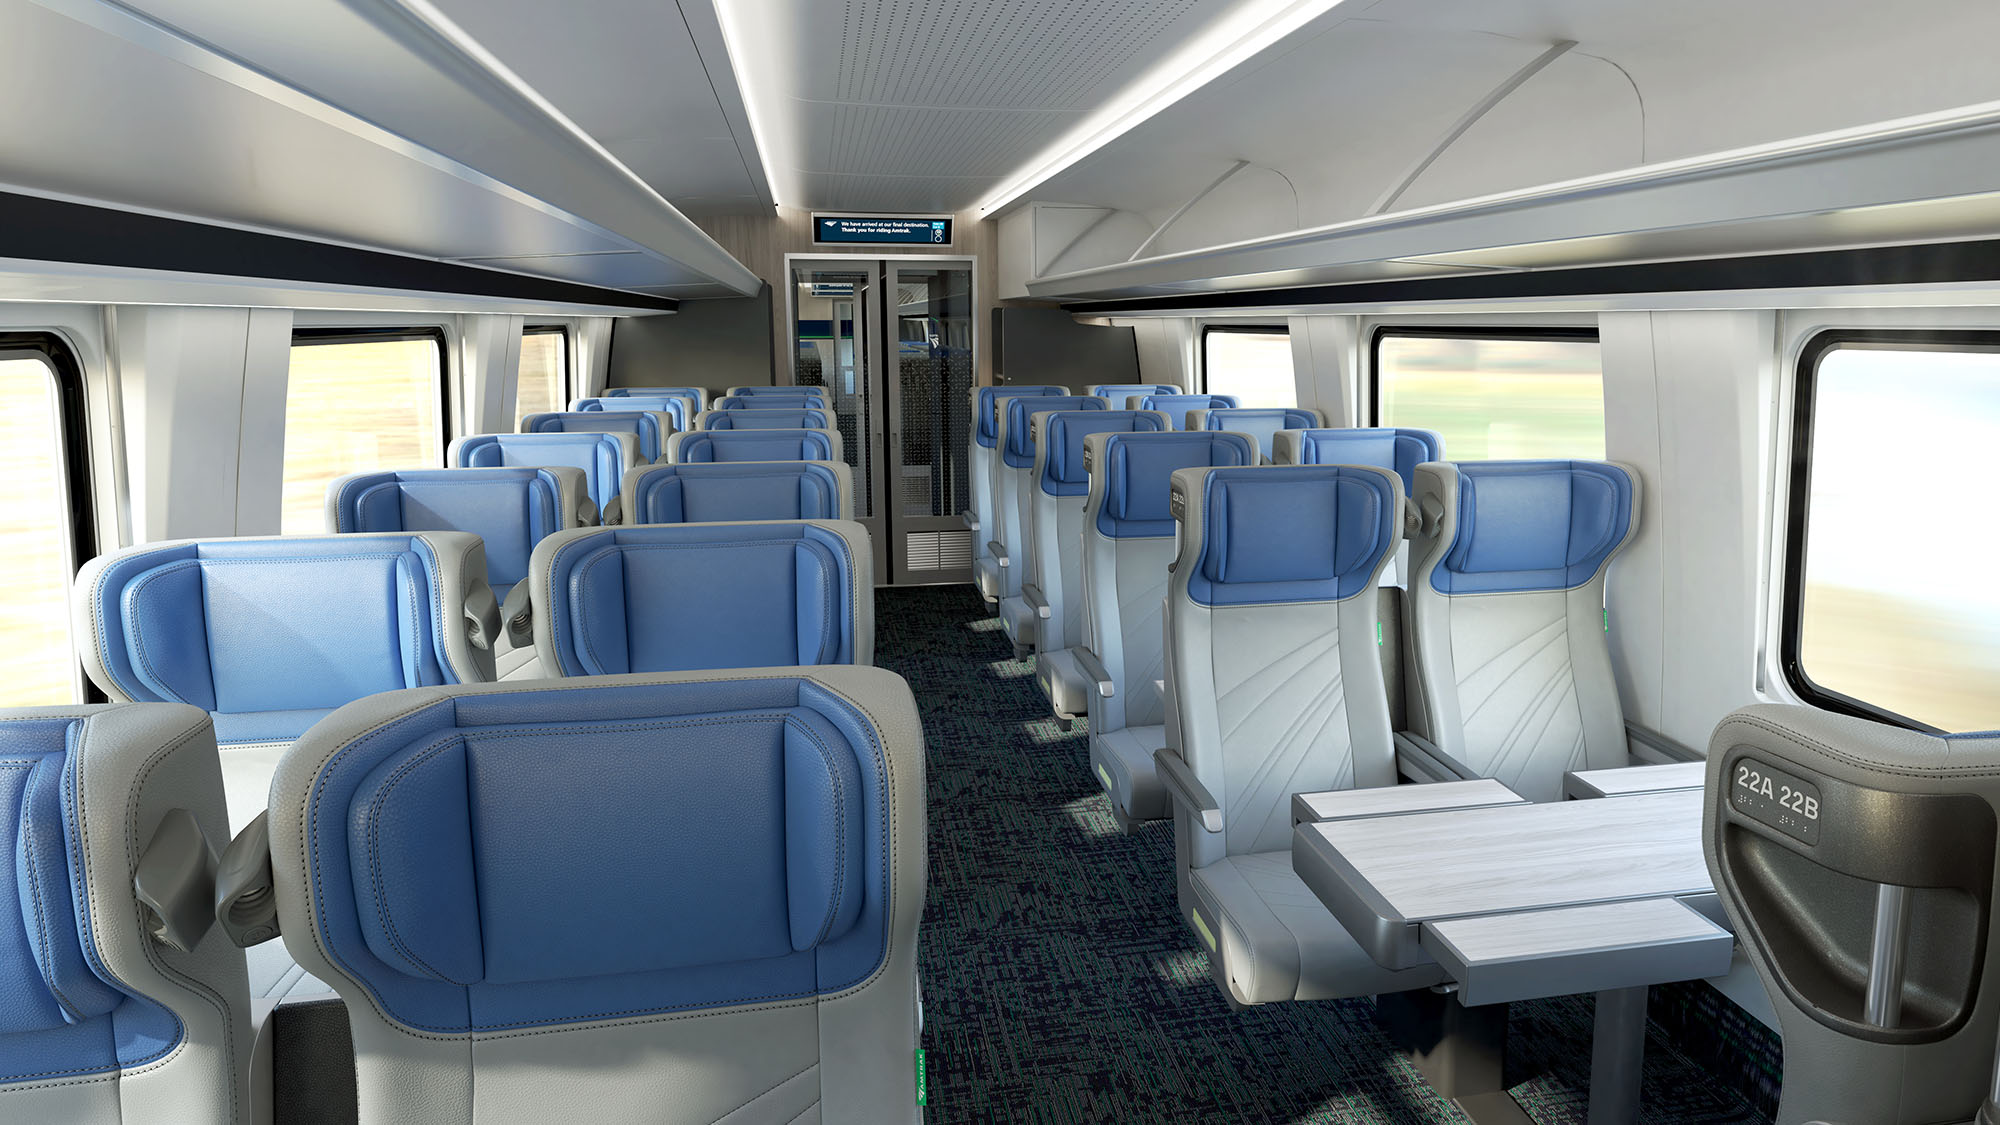 Rendu conceptuel des trains interurbains d'Amtrak